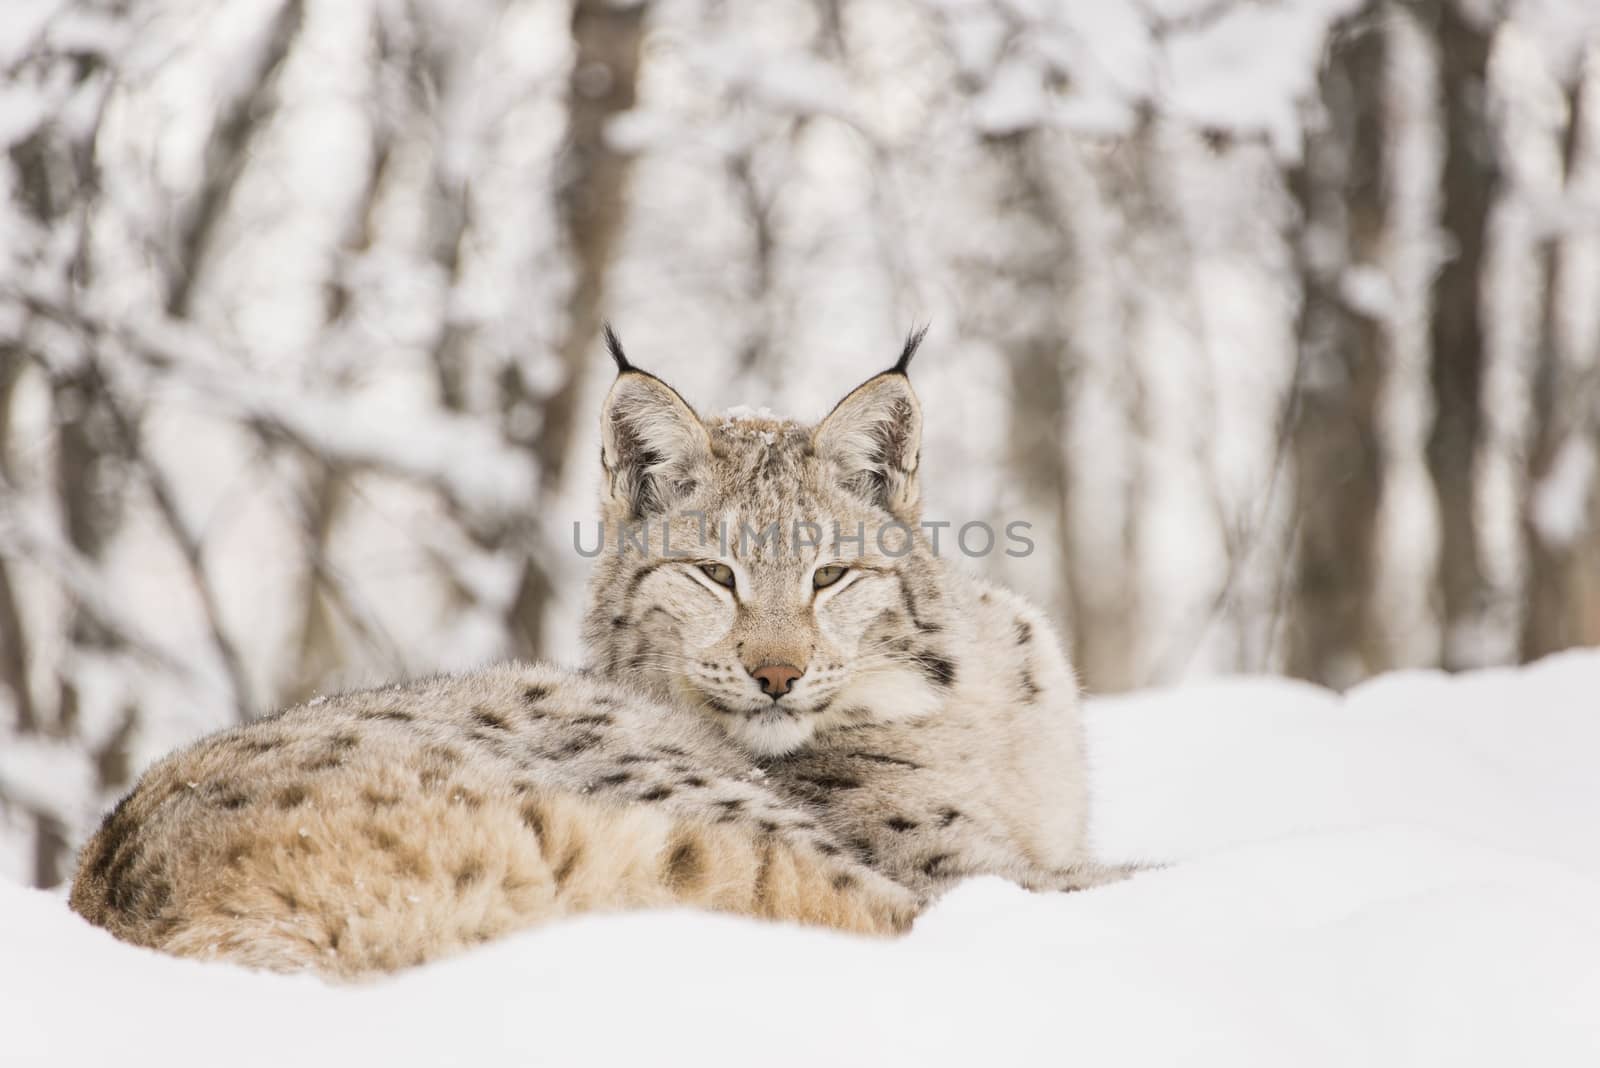 Lynx relaxing in snow by GryT